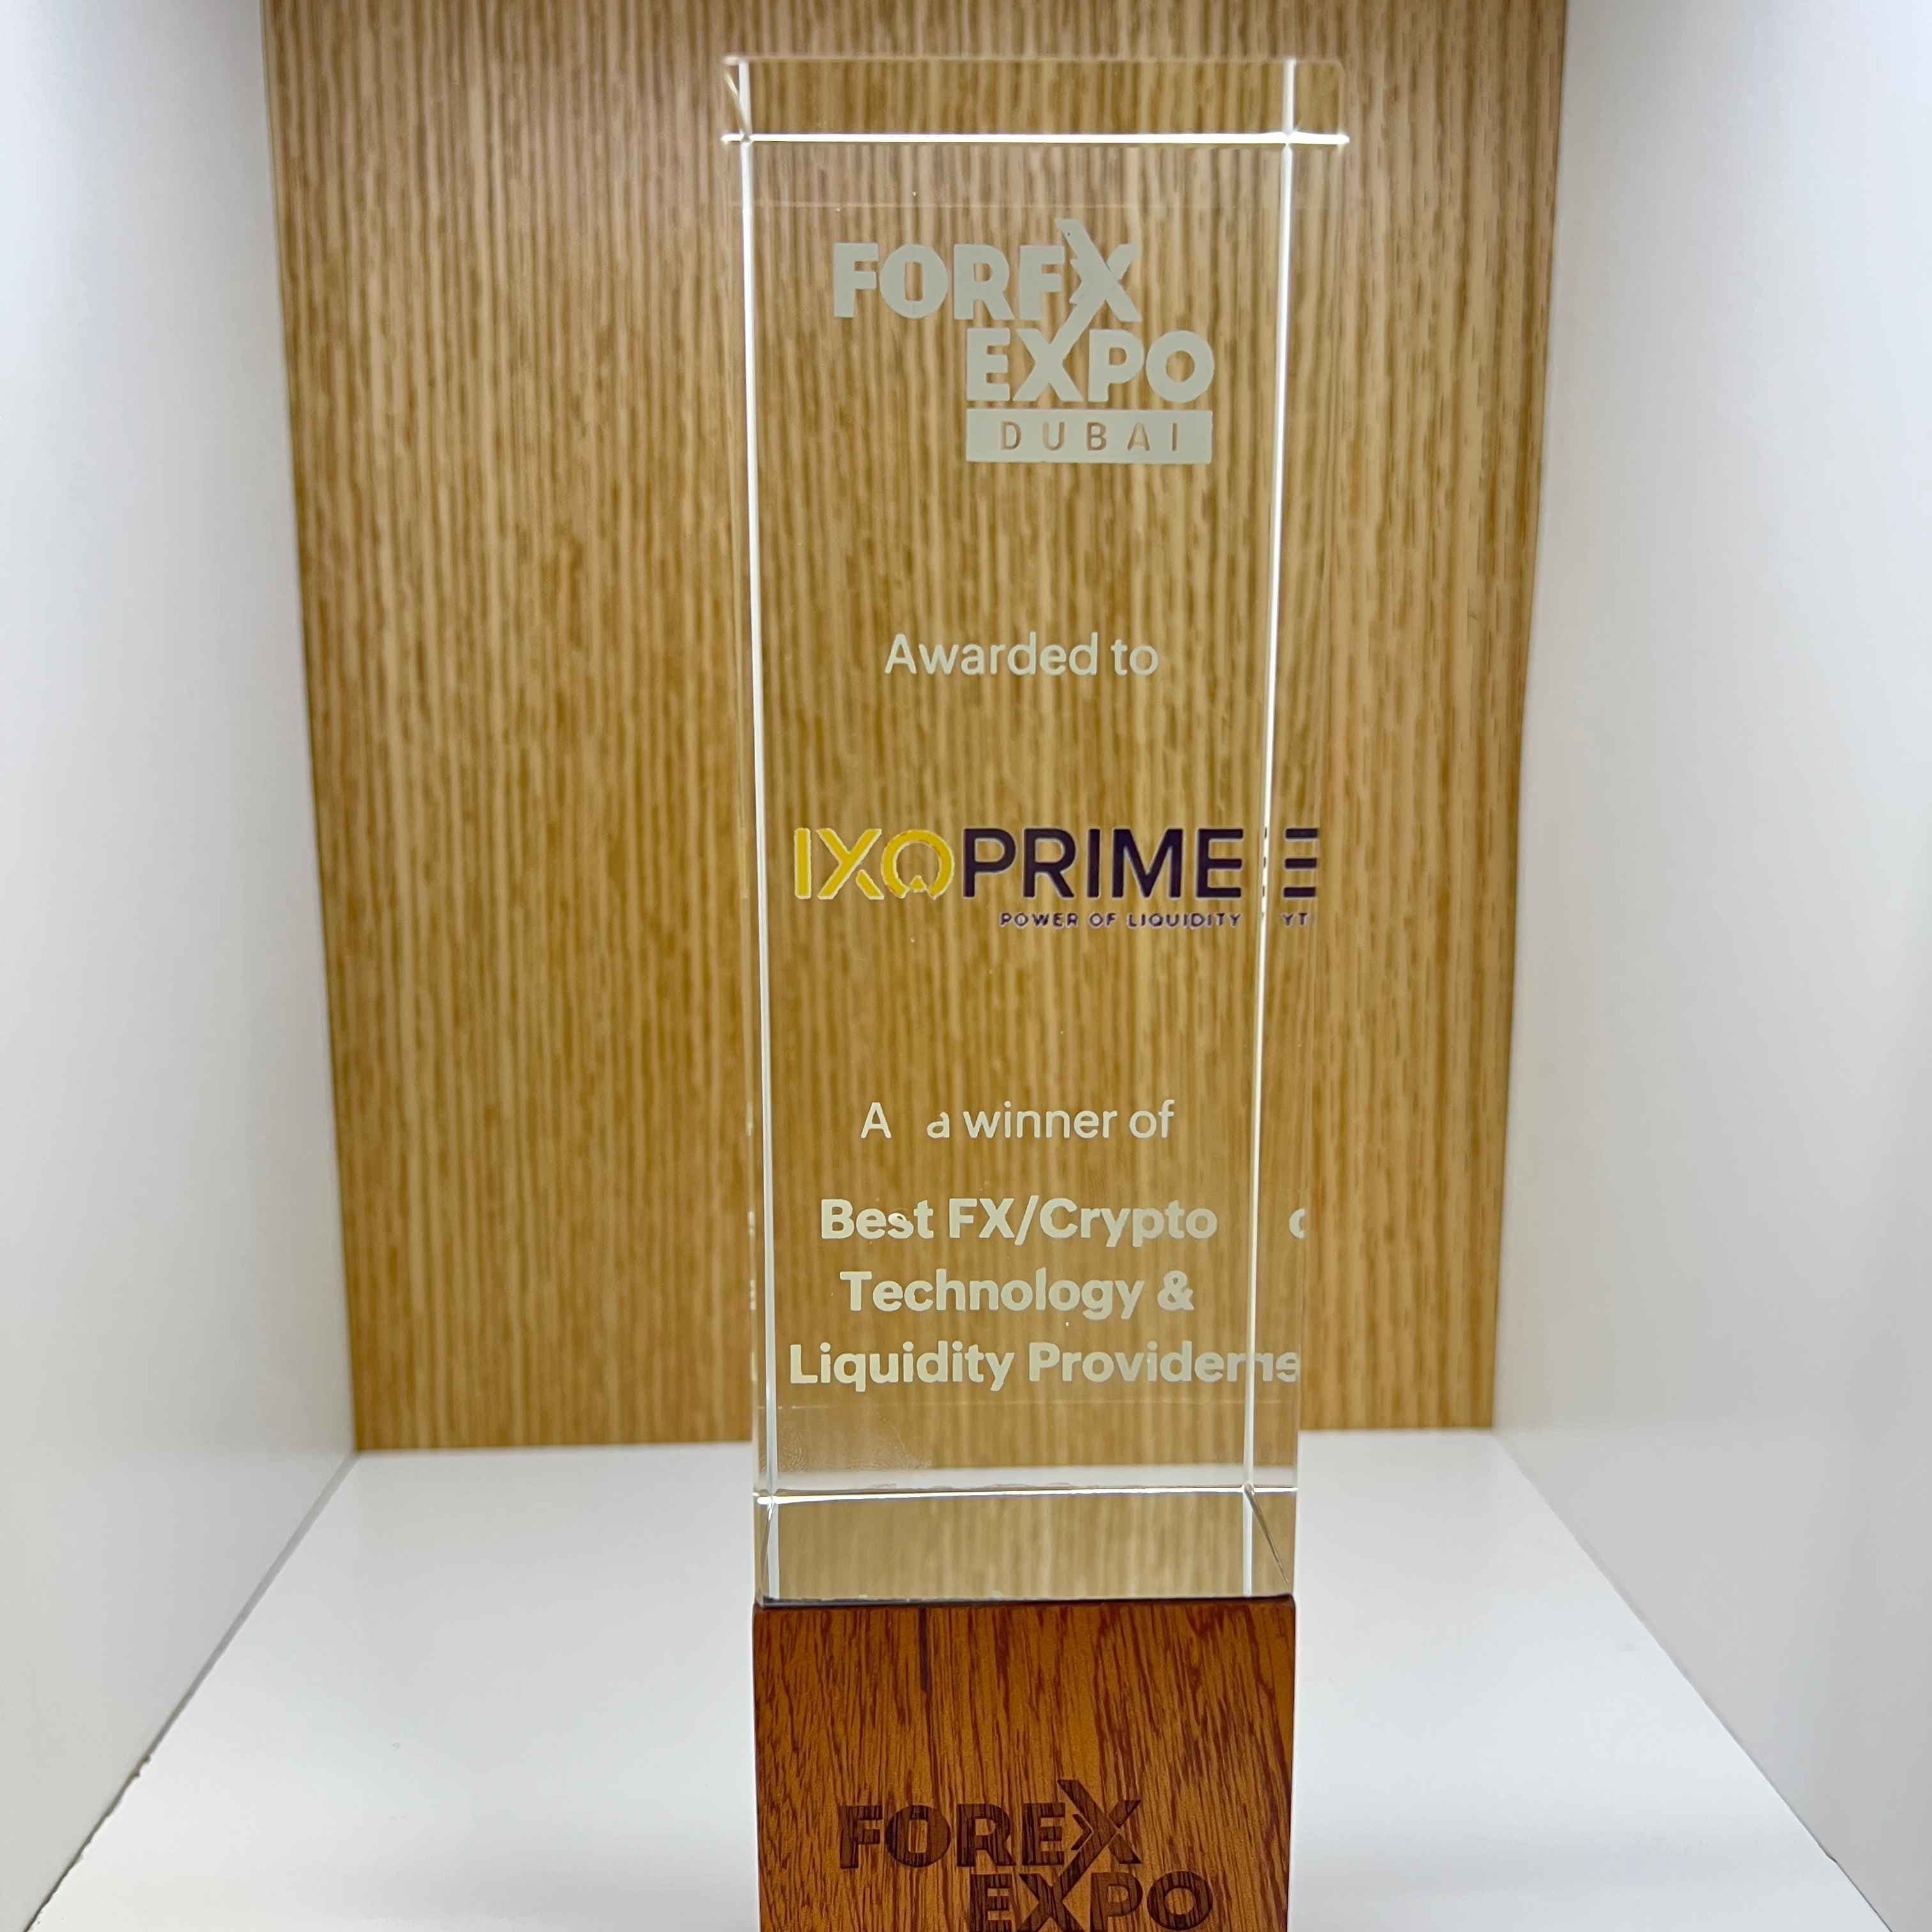 IXO Prime award: Best FX/Crypto Technology & Liquidity Provider